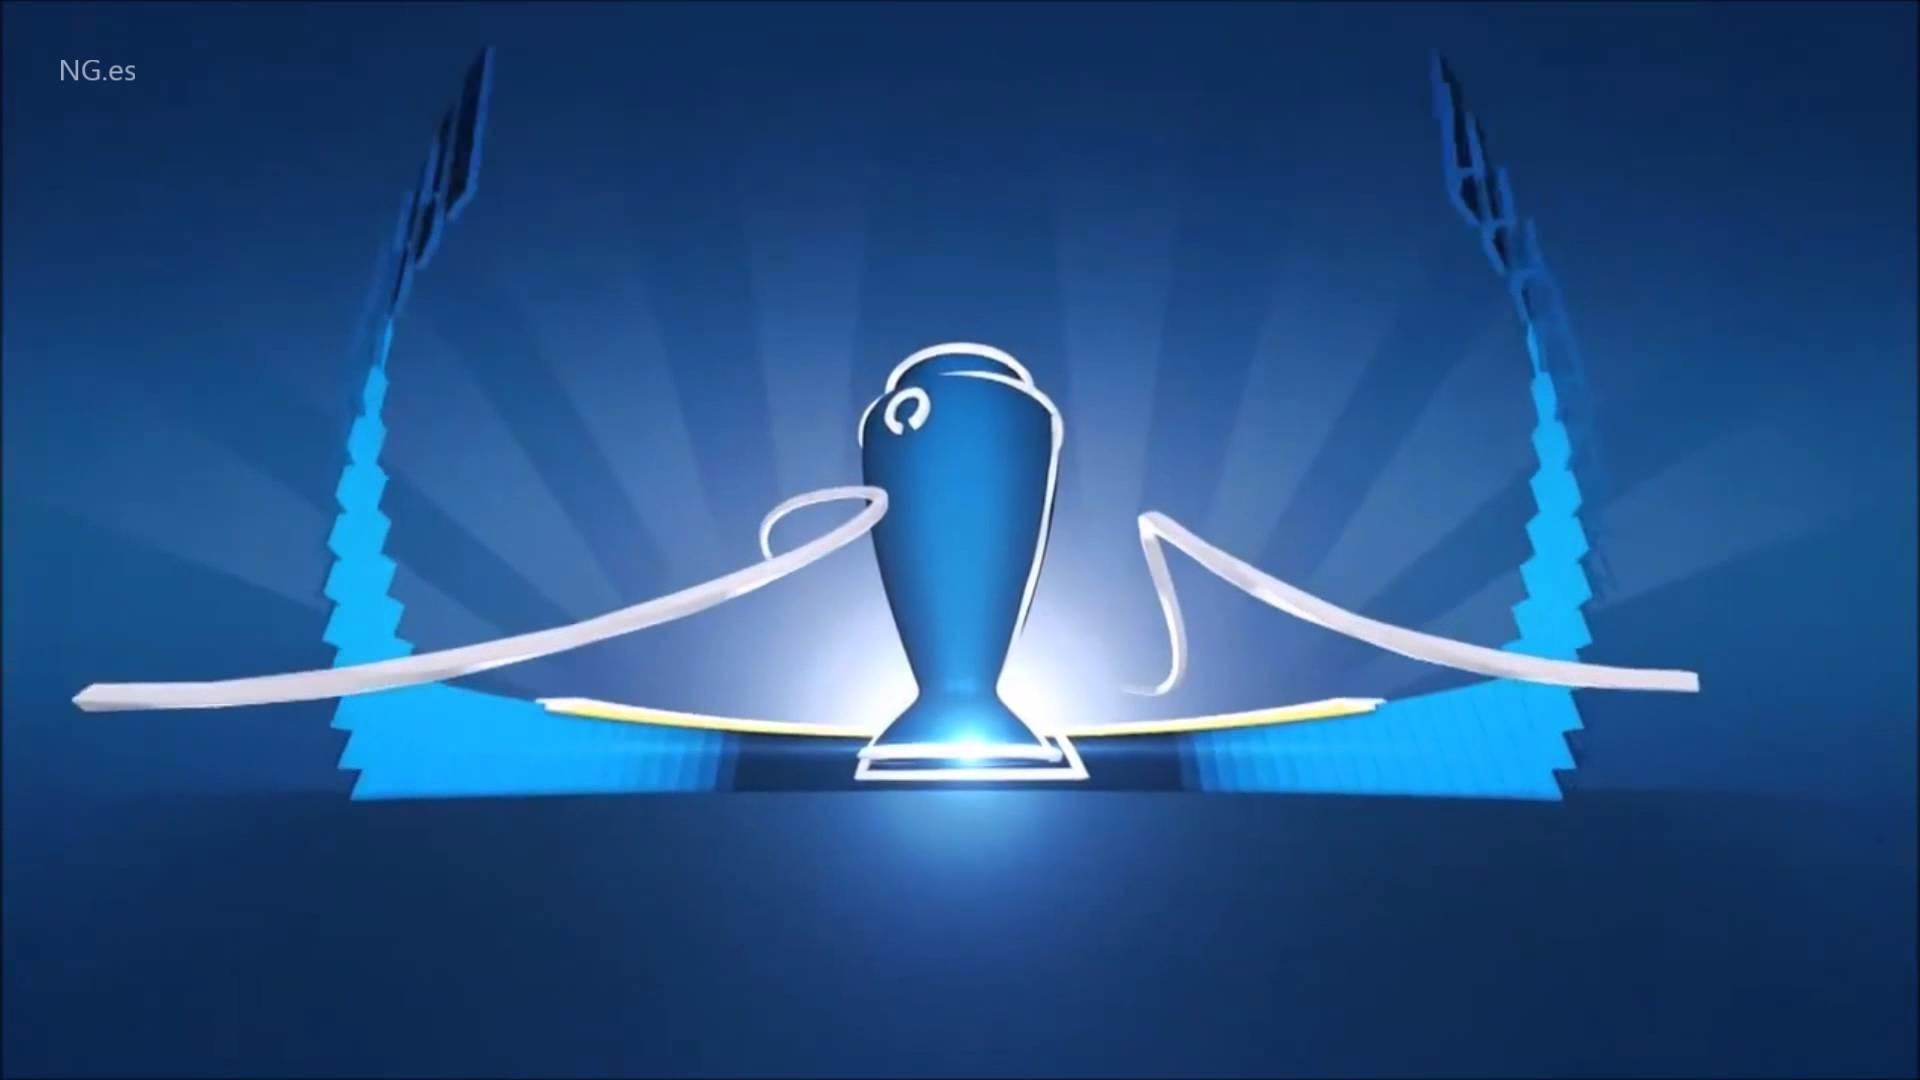 Uefa Champions League Wallpaper HD